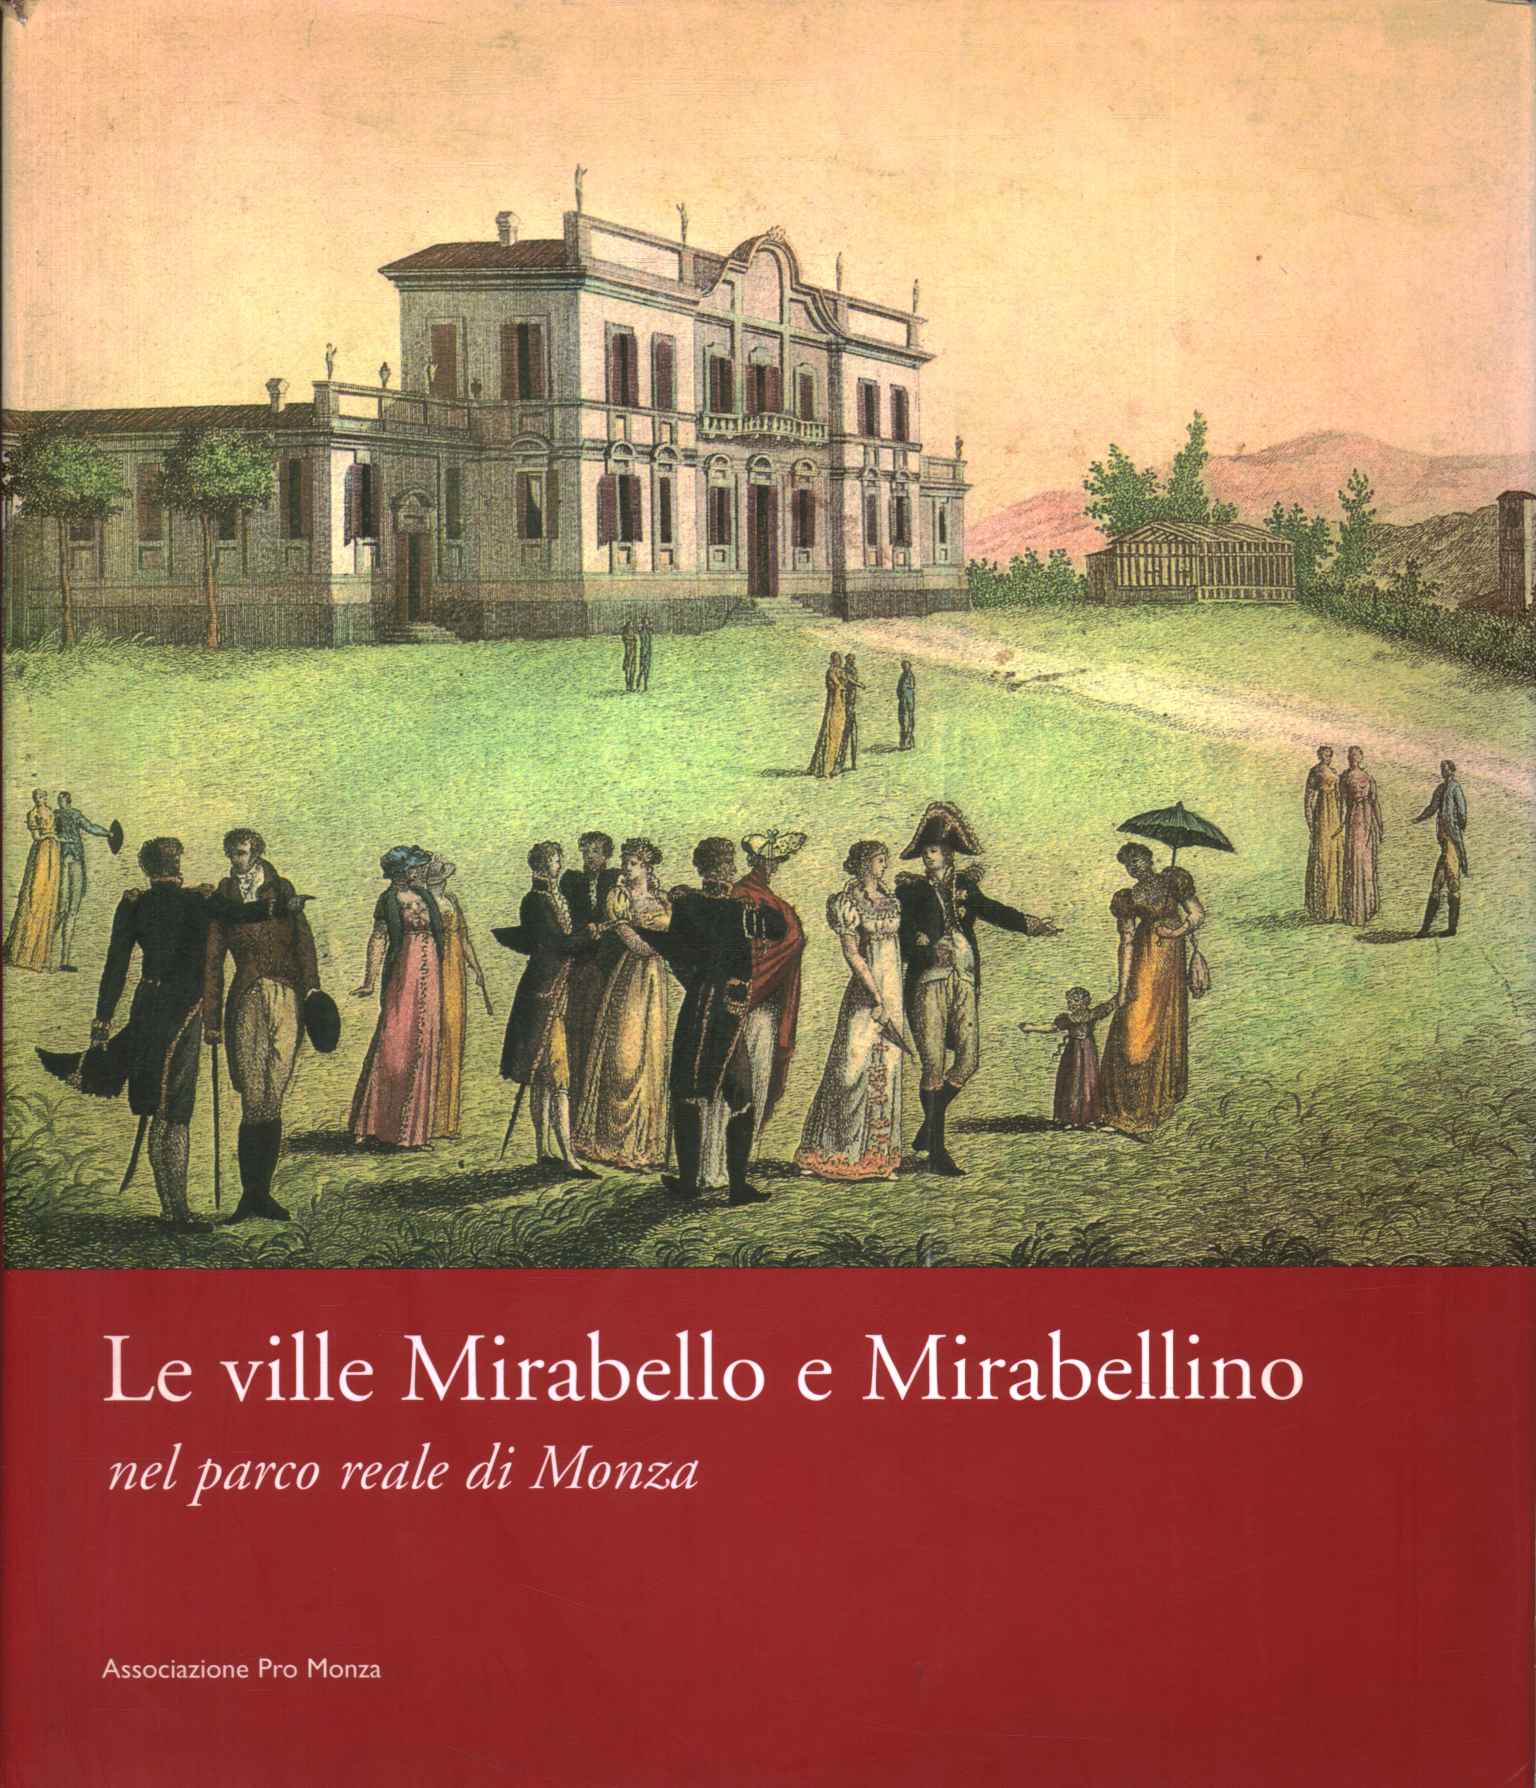 Les villas Mirabello et Mirabellino